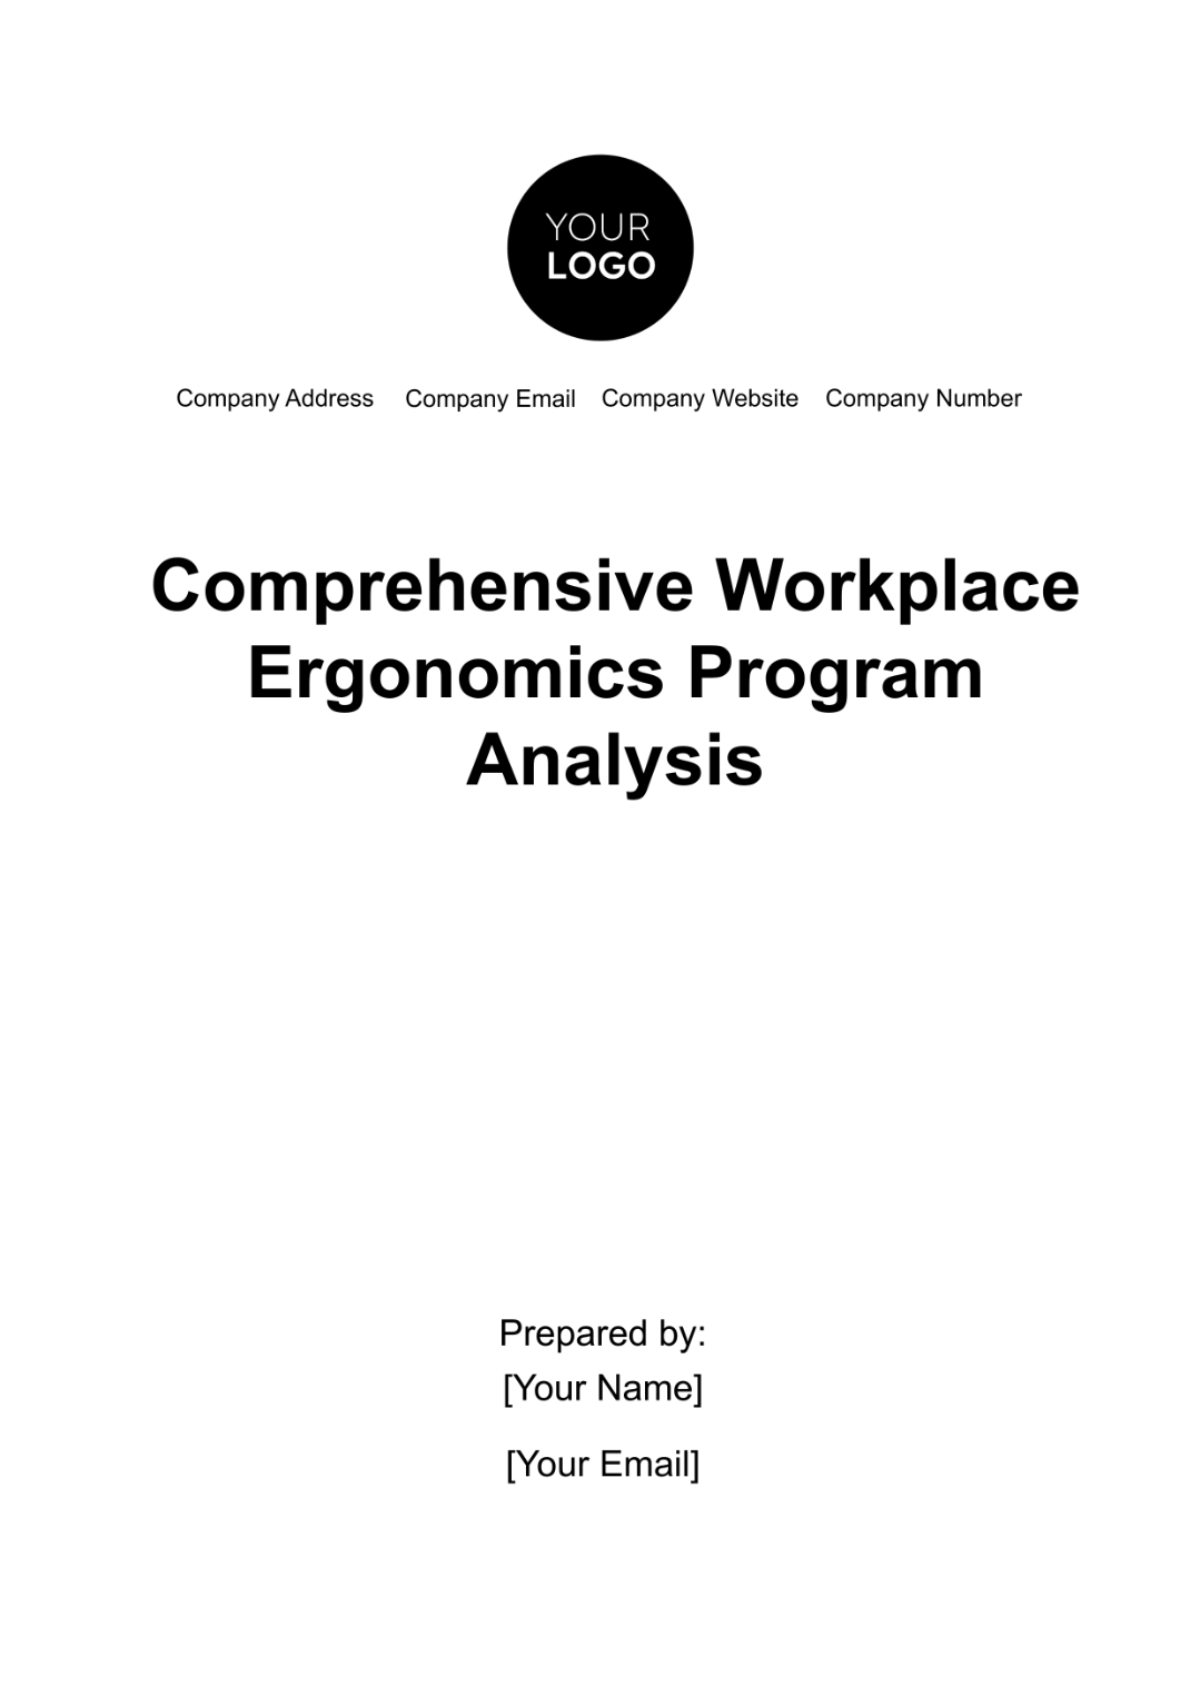 Comprehensive Workplace Ergonomics Program Analysis Template